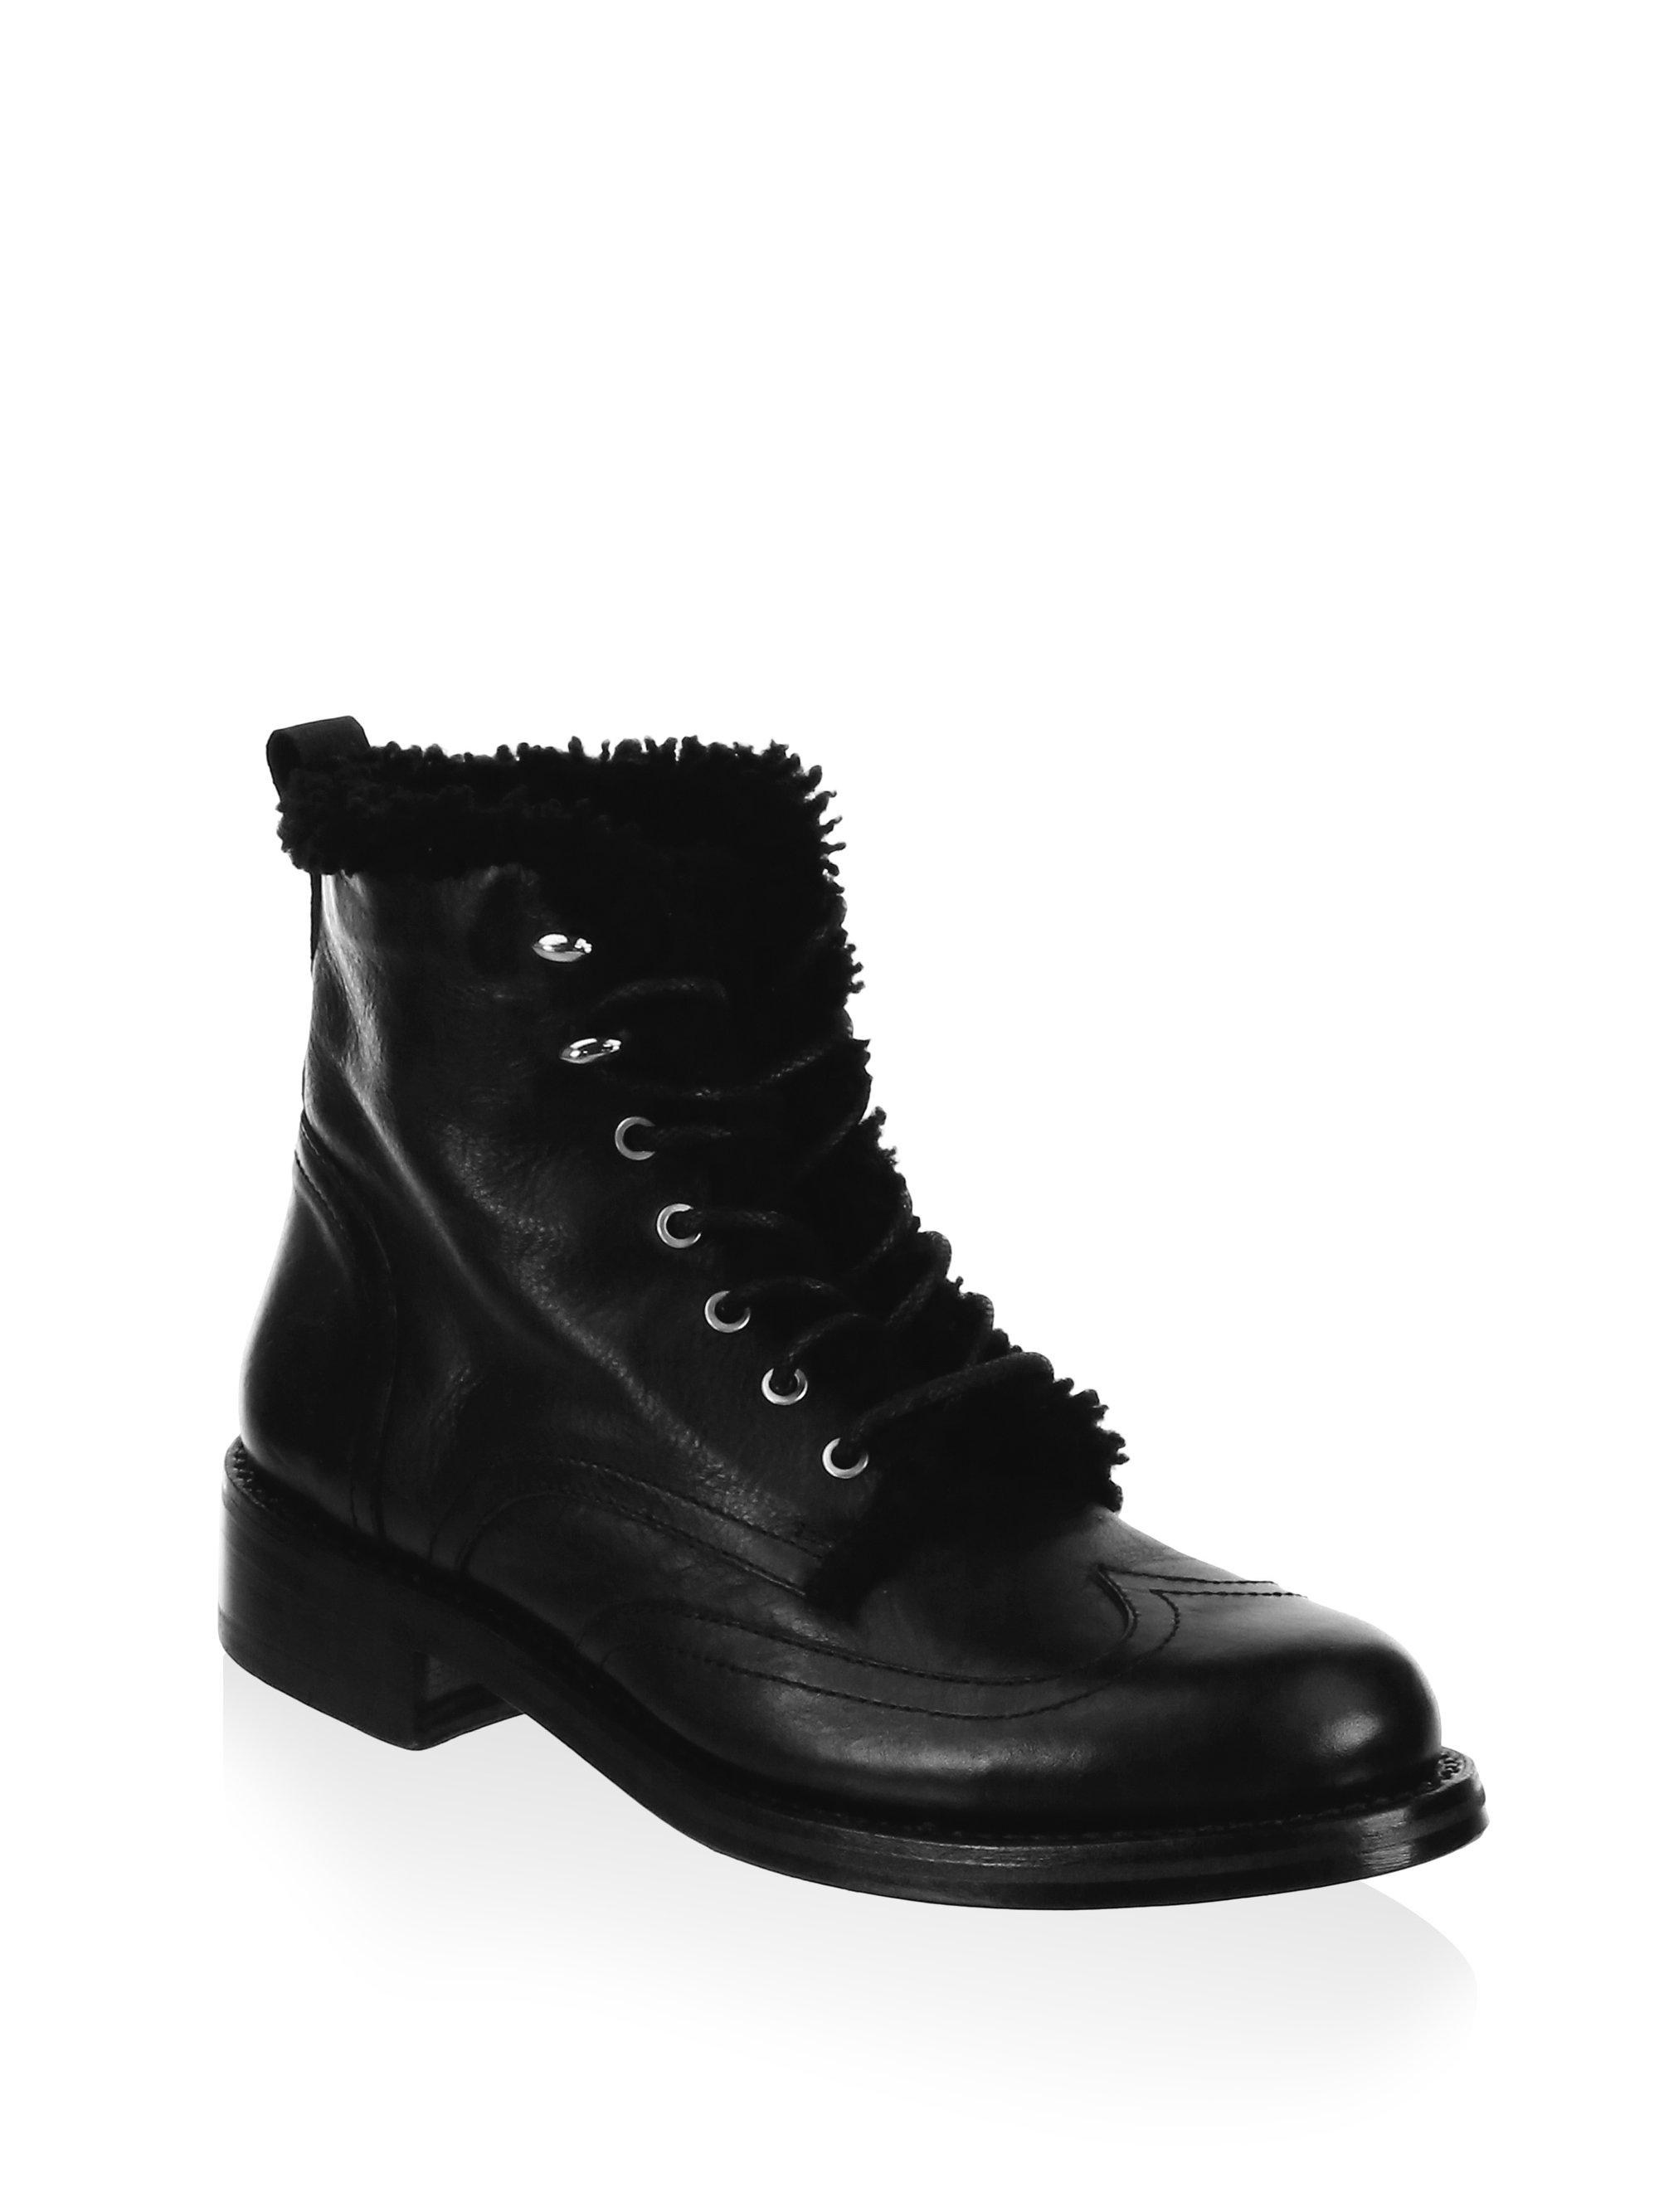 Lyst - Rag & Bone Cozen Shearling Combat Boots in Black